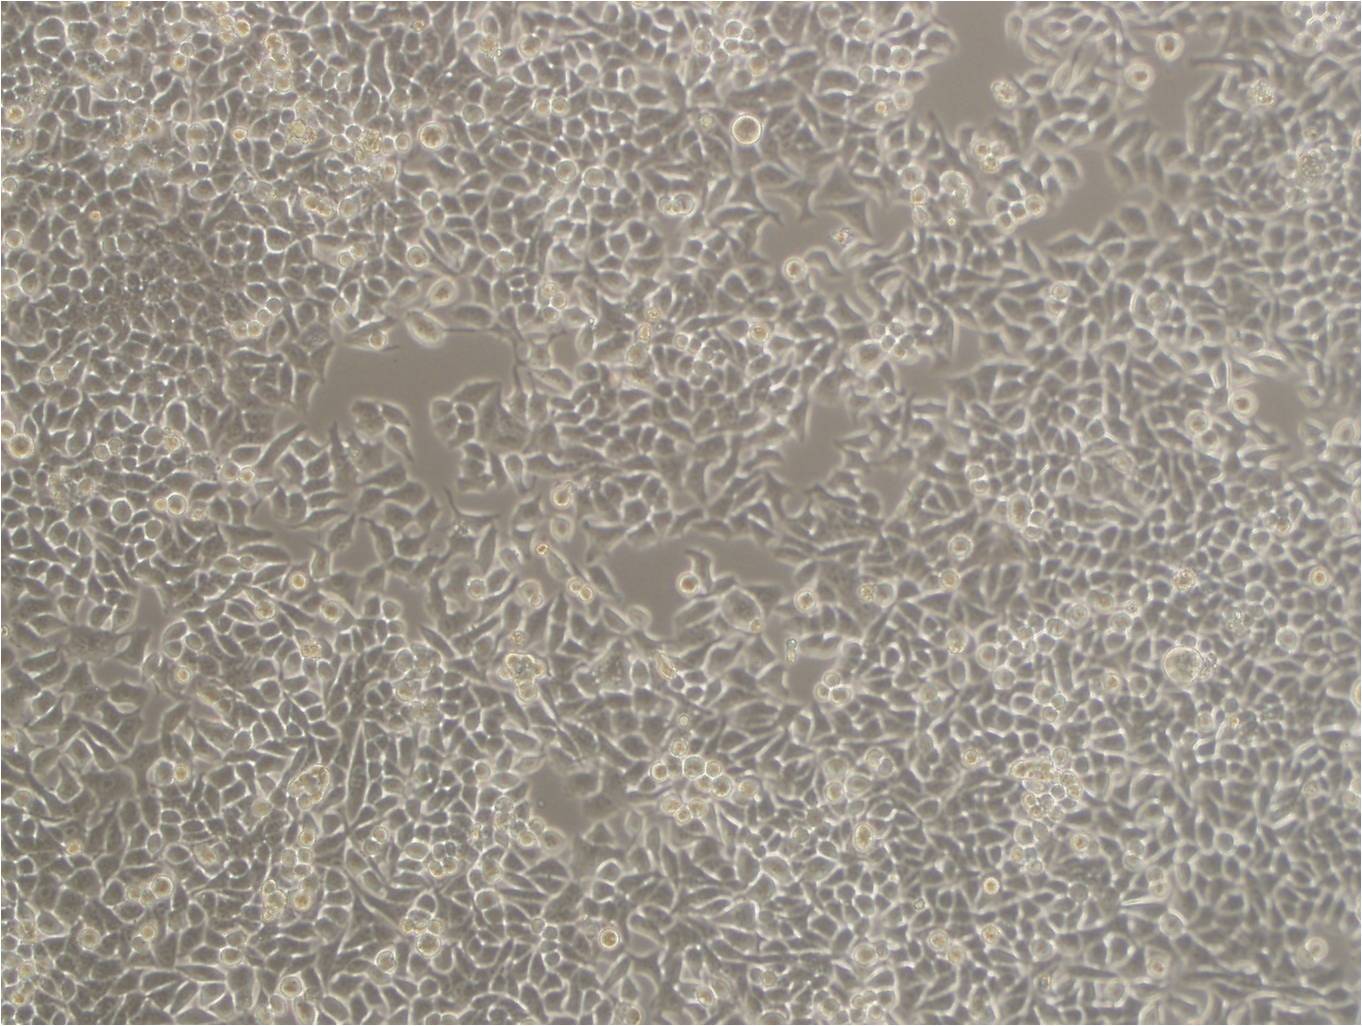 EFO-27 Cell:人卵巢腺癌细胞系